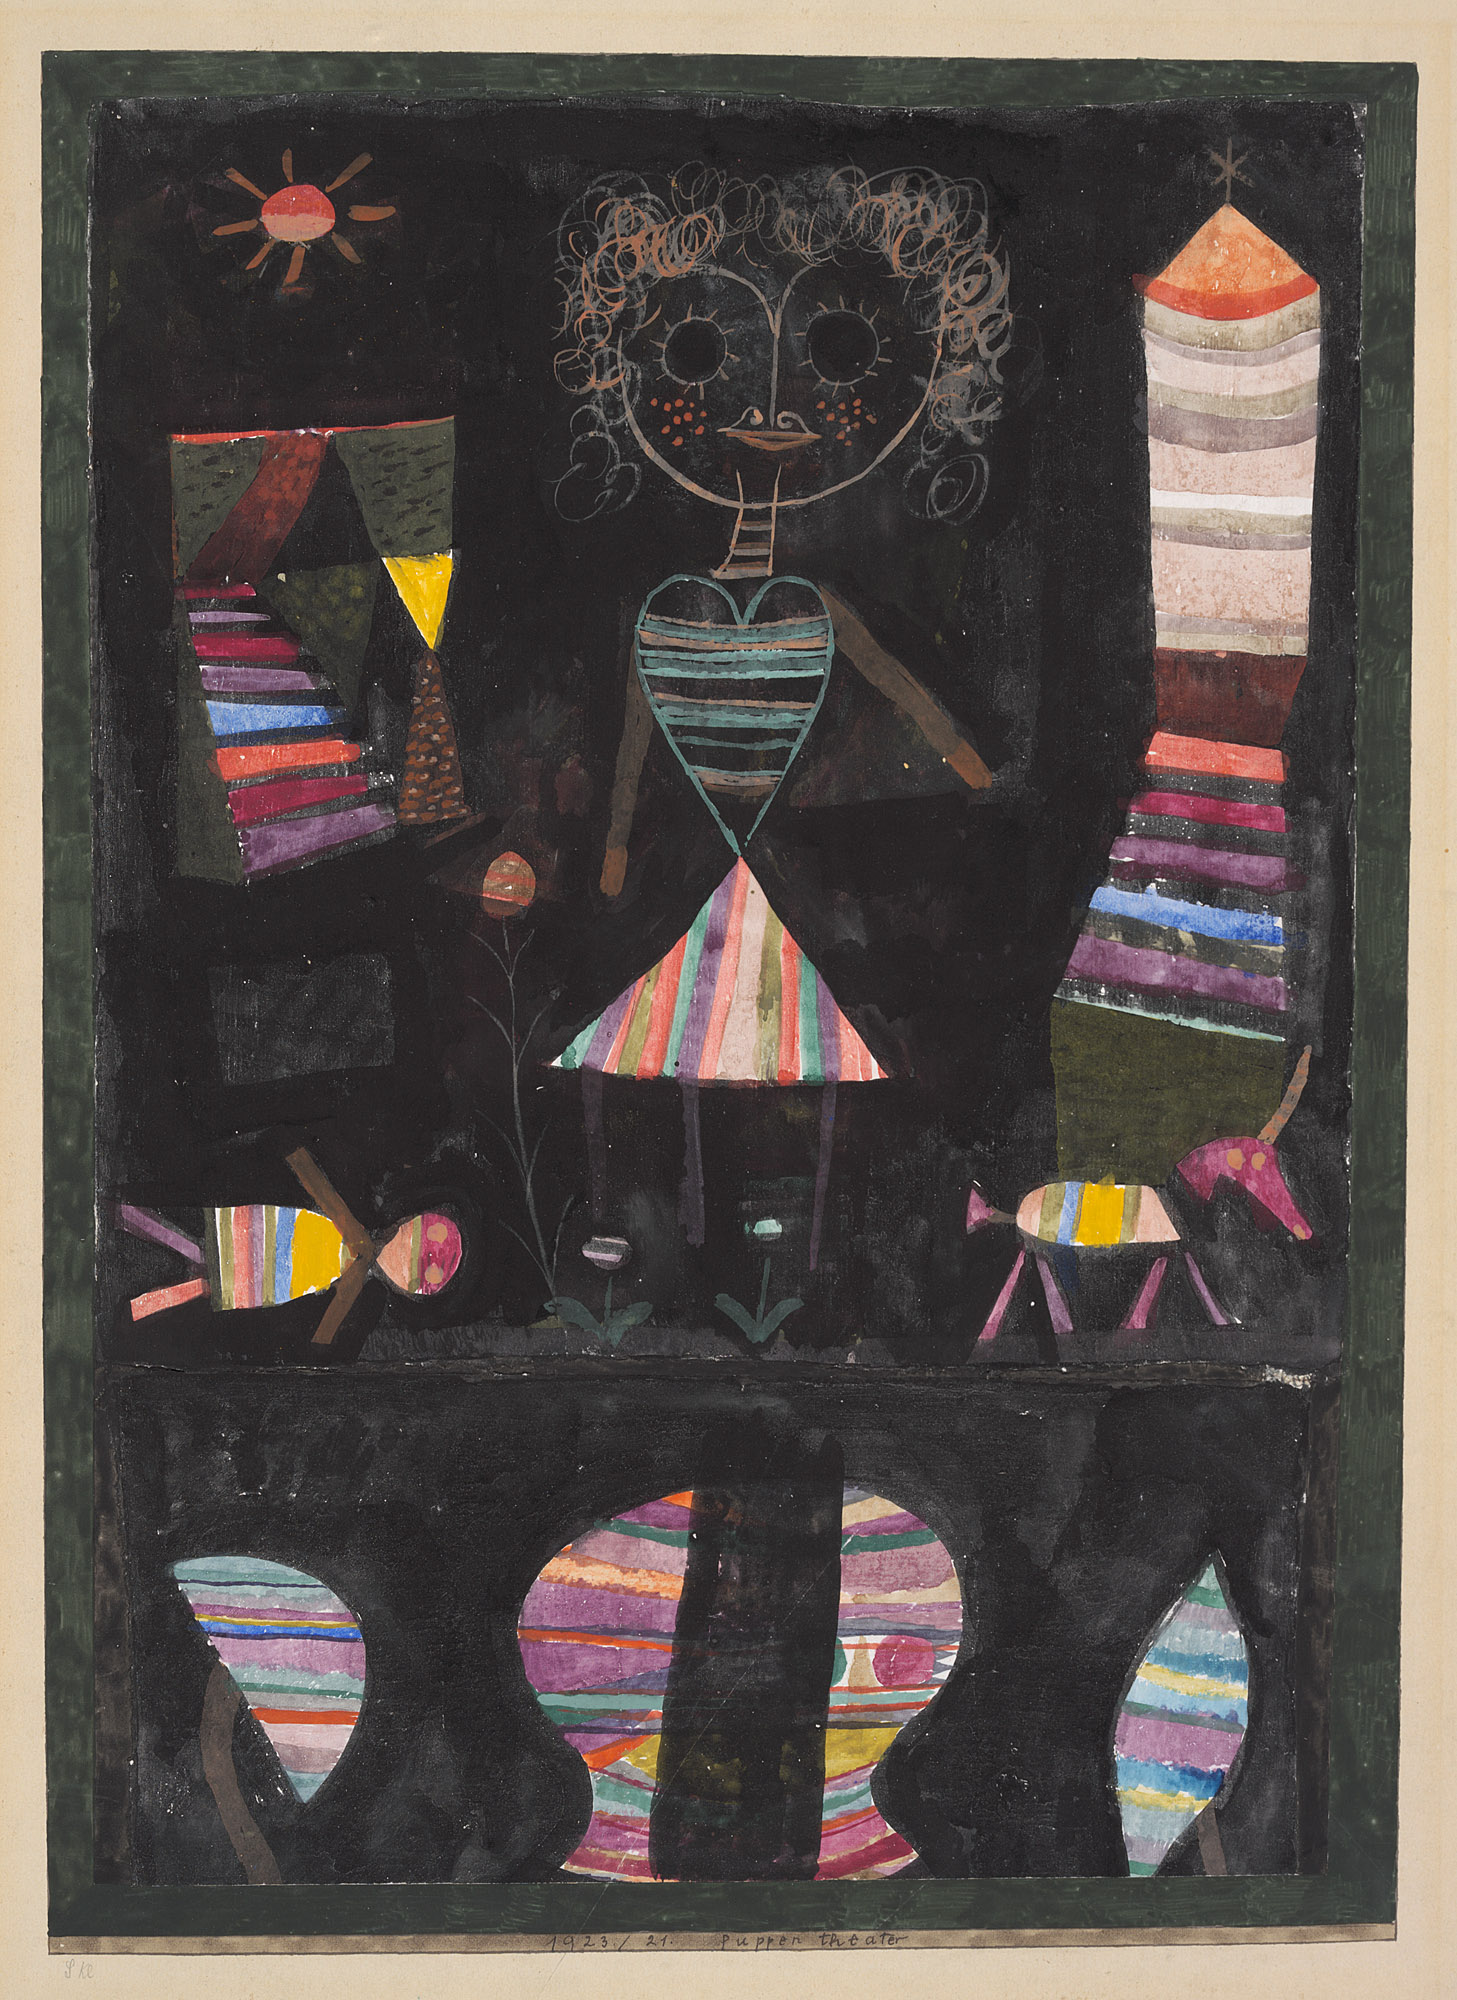 Puppet Theatre by Paul Klee - 1923 - 52 x 37,6 cm Zentrum Paul Klee